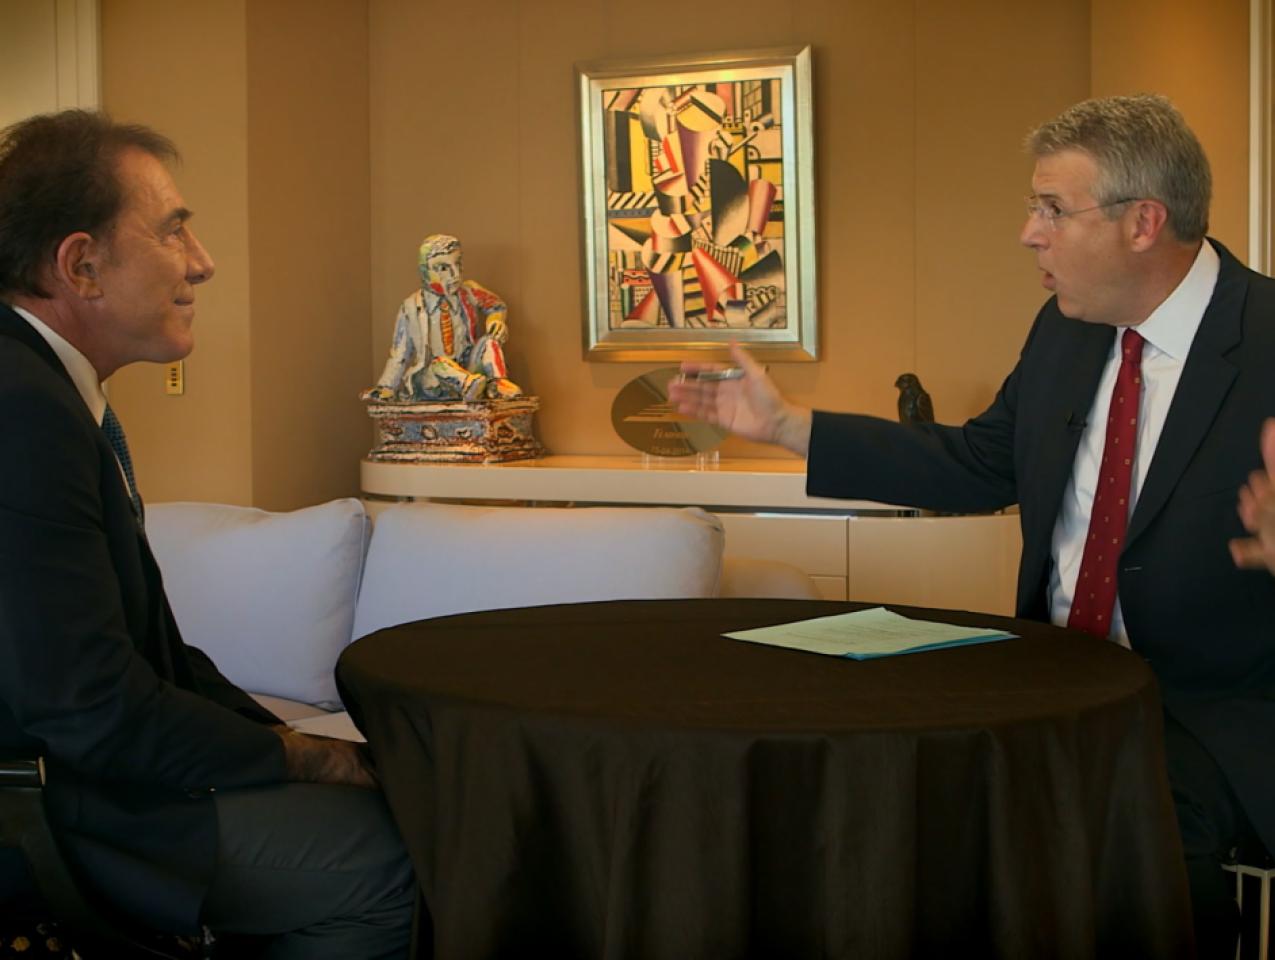 Wynn Resorts owner Steve Wynn is interviewed by Peter Robinson